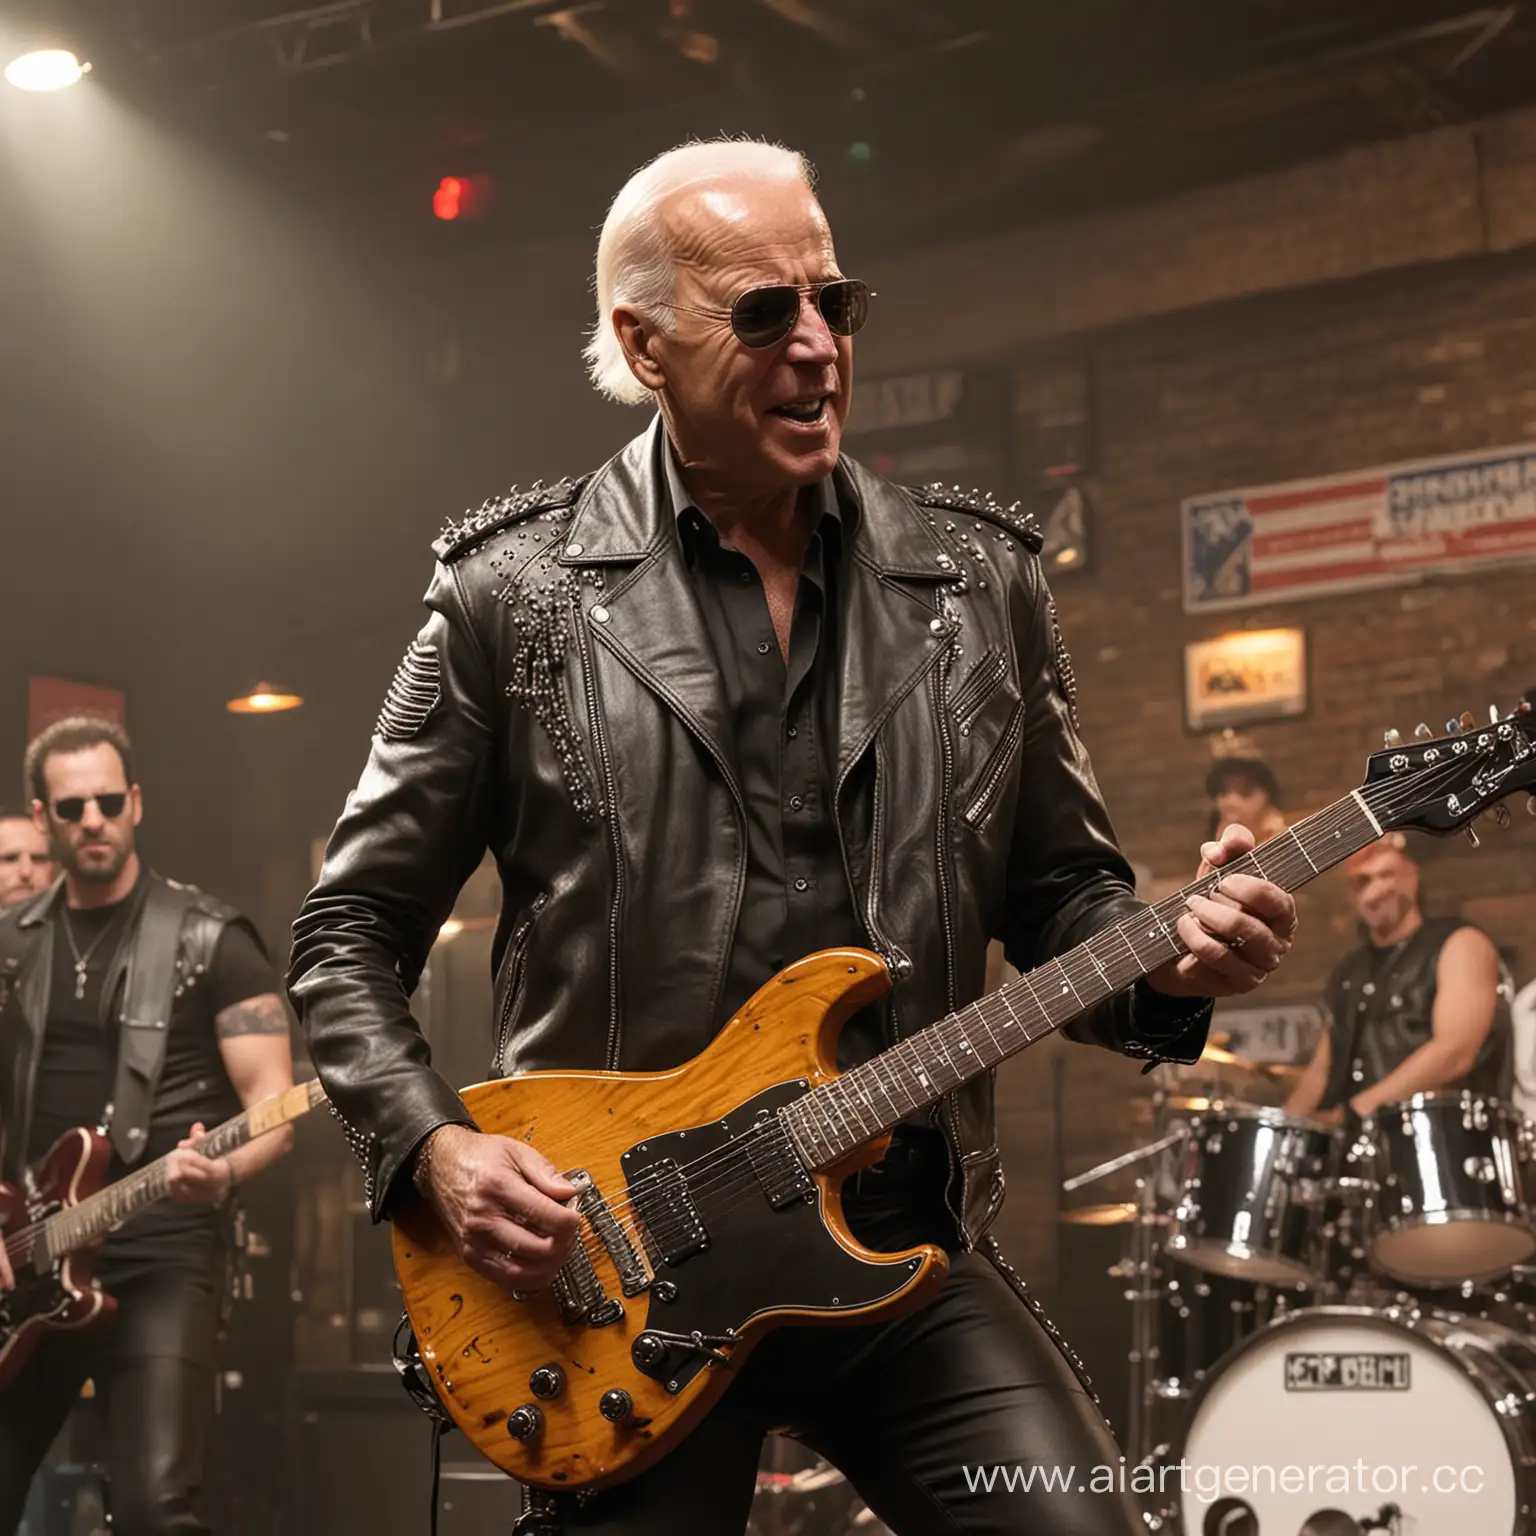 Joe-Biden-Rockstar-Electrifying-Performance-in-Biker-Leather-Jacket-and-Aviator-Sunglasses